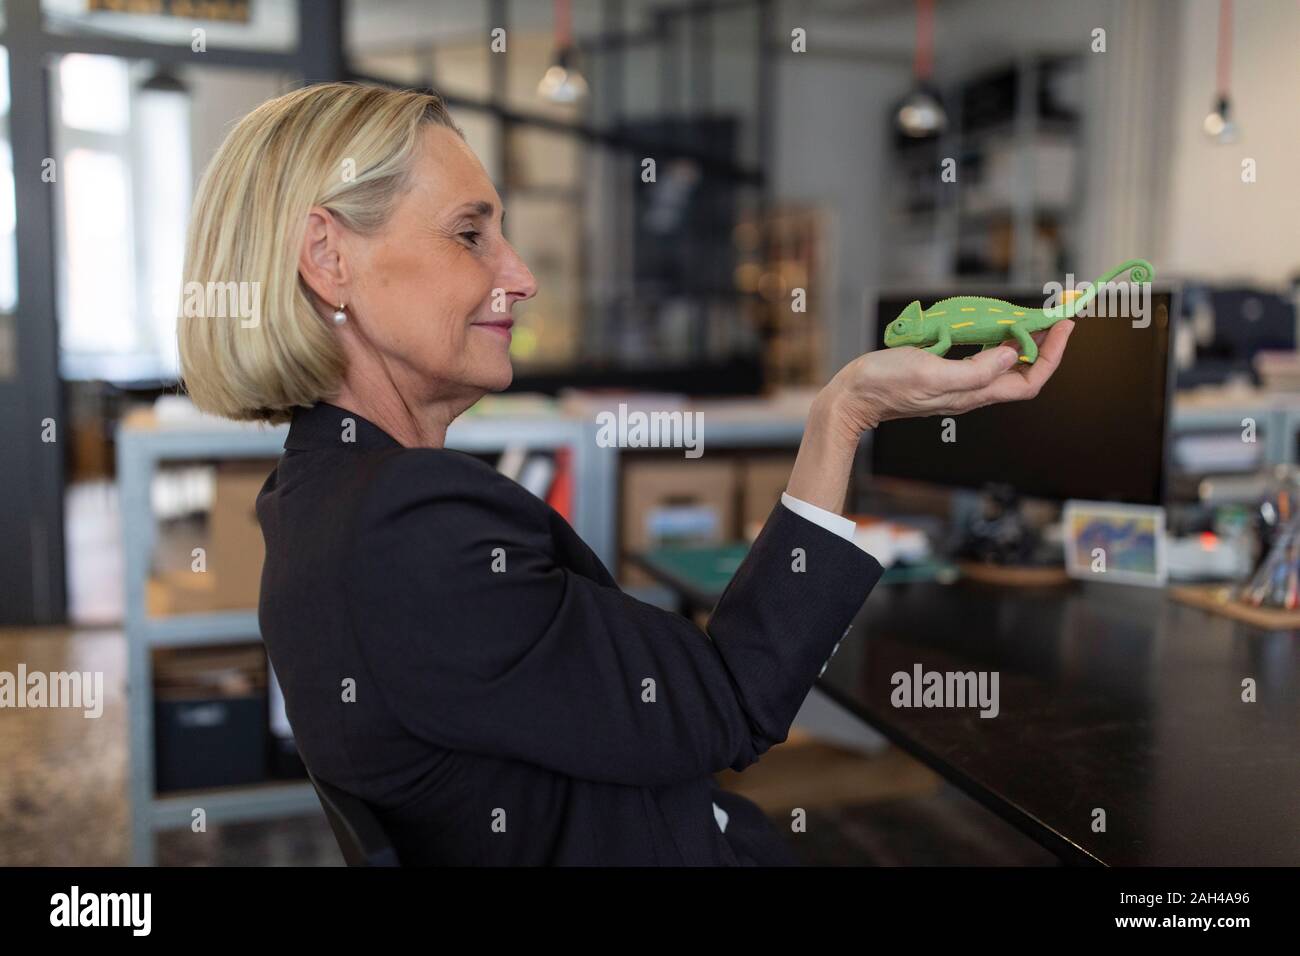 Mature businesswoman holding chameleon figurine in office Stock Photo